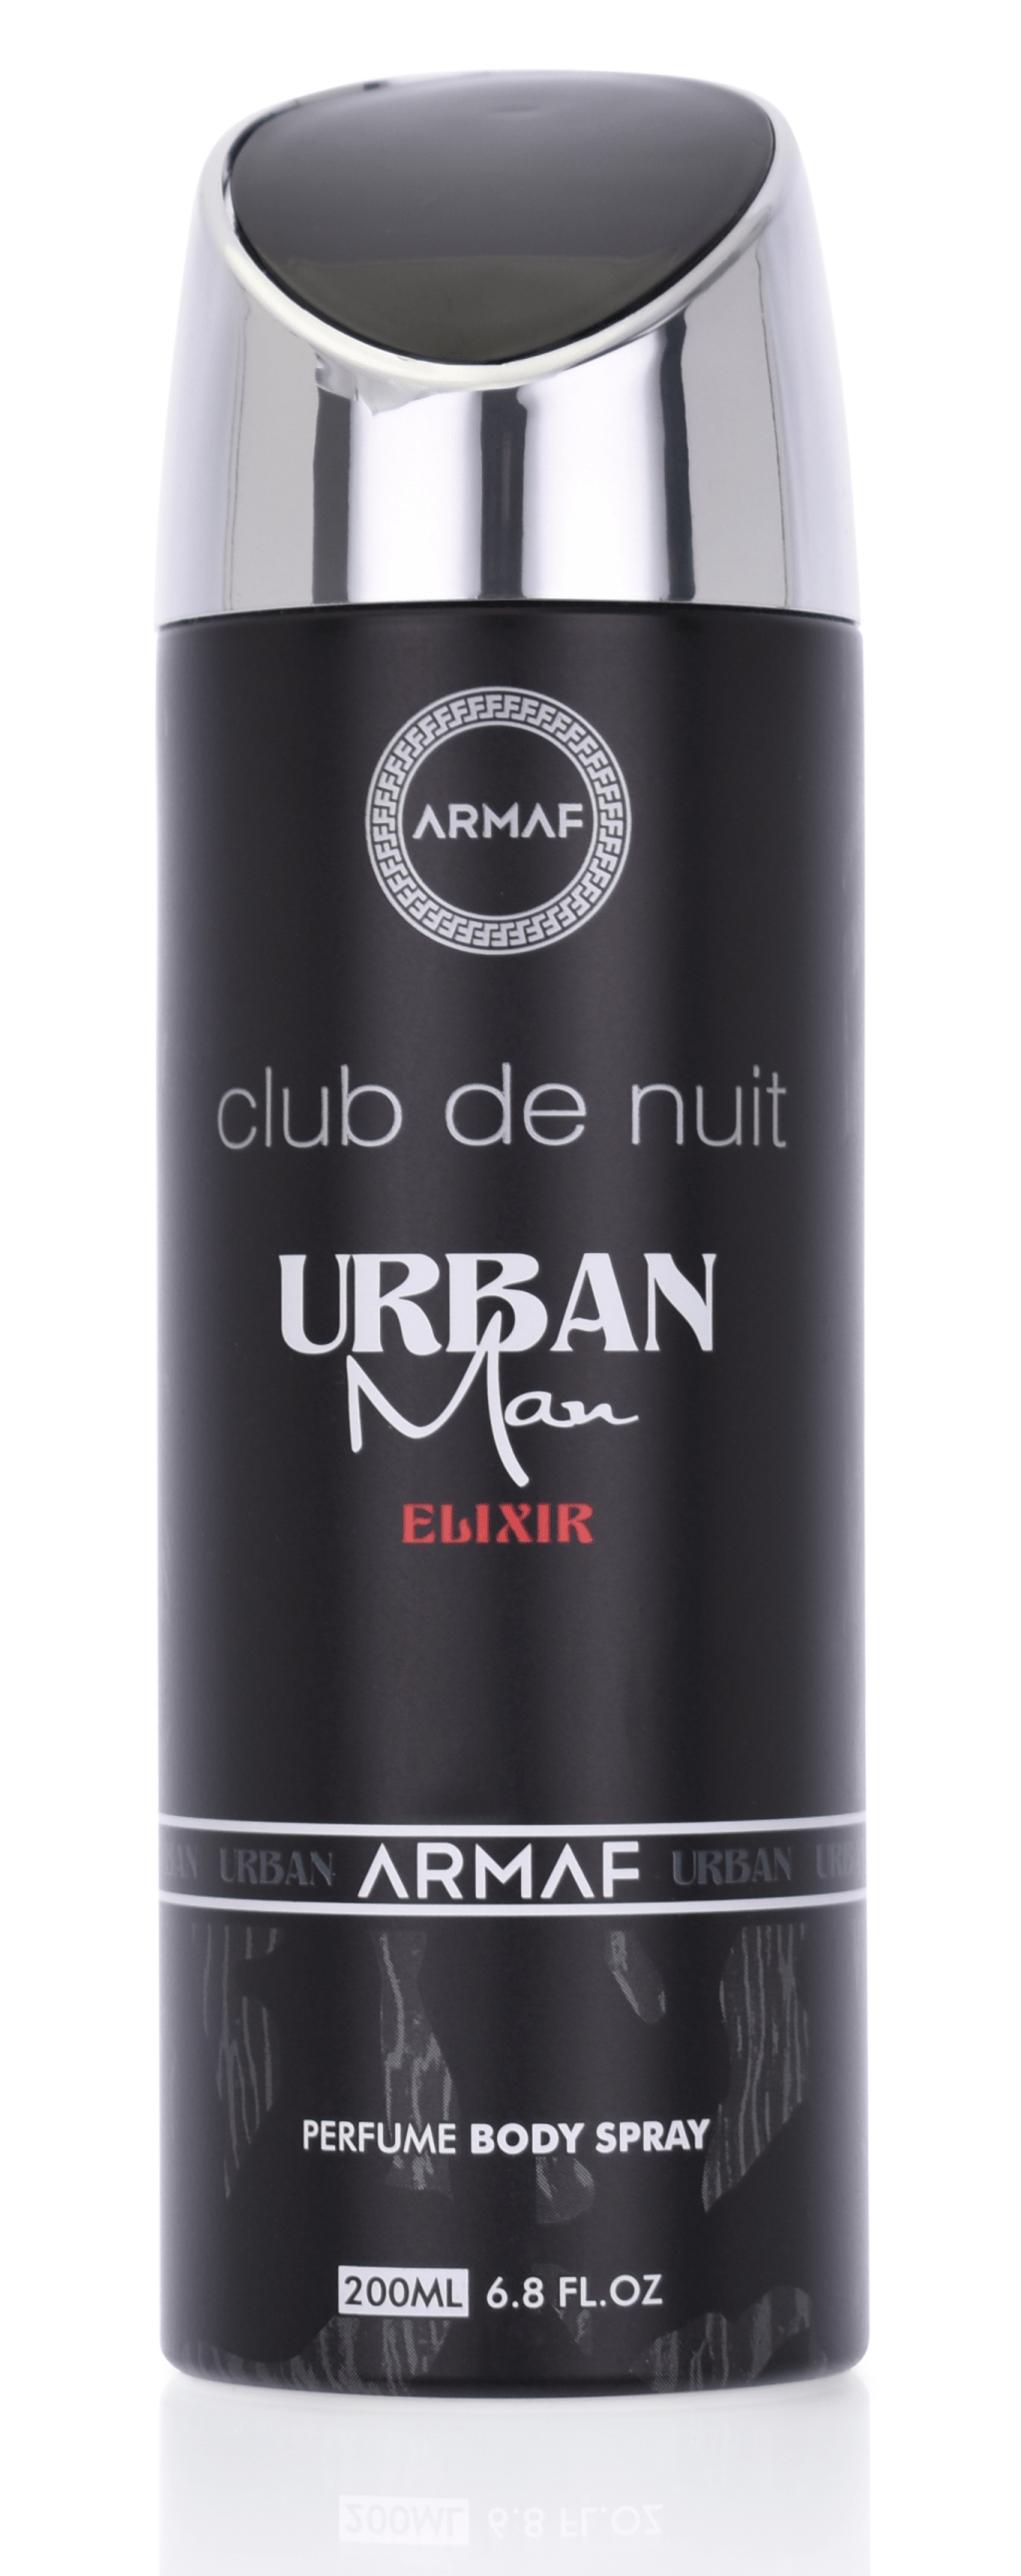 Armaf Club de Nuit Urban Man Elixir 200 ml Body Spray